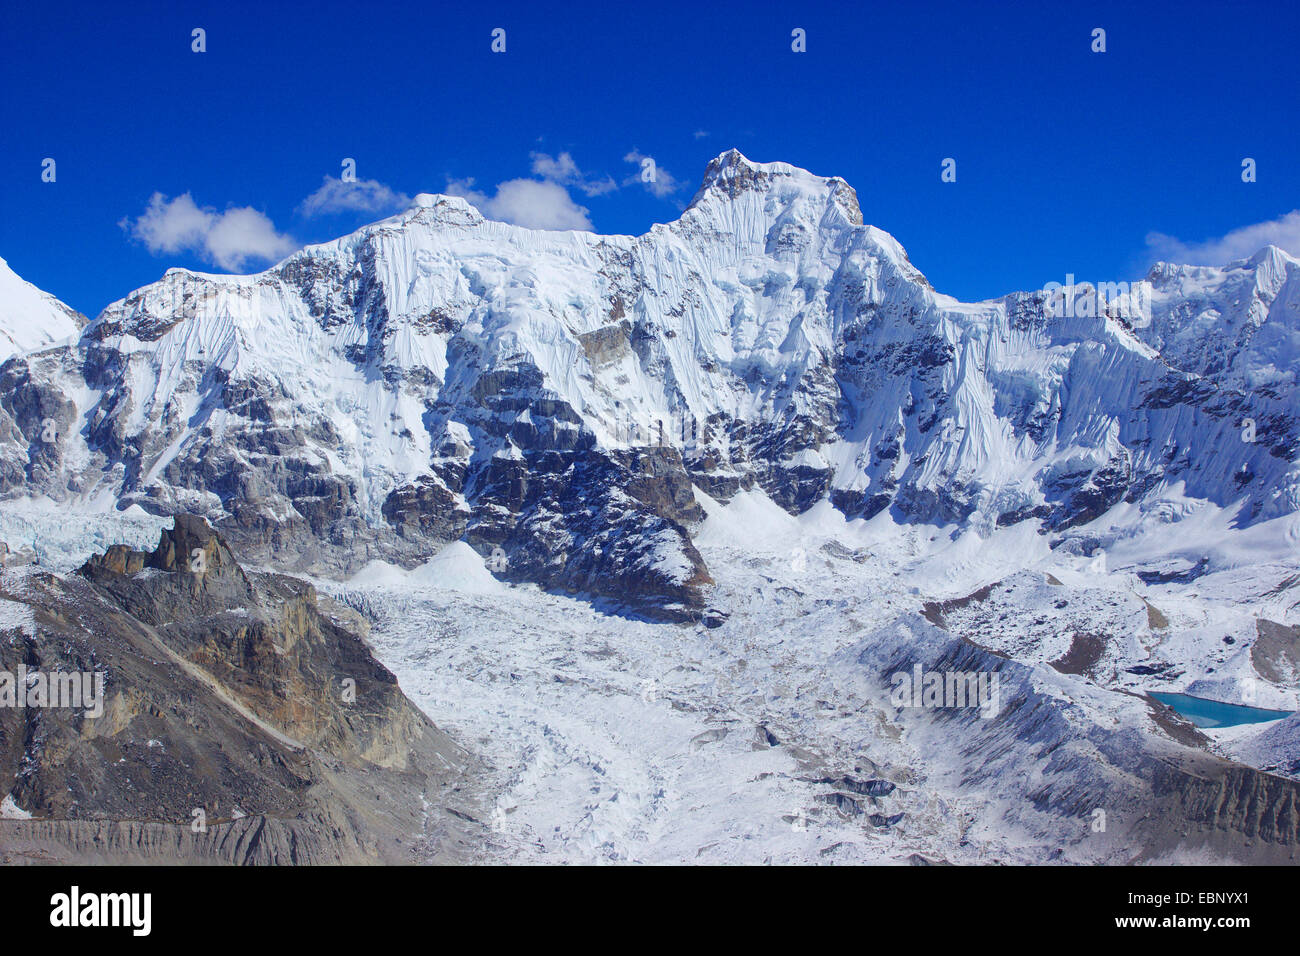 (Hungchi Chakhung) Vista desde Ngozumba Tse, Nepal, Himalaya, Khumbu Himal Foto de stock